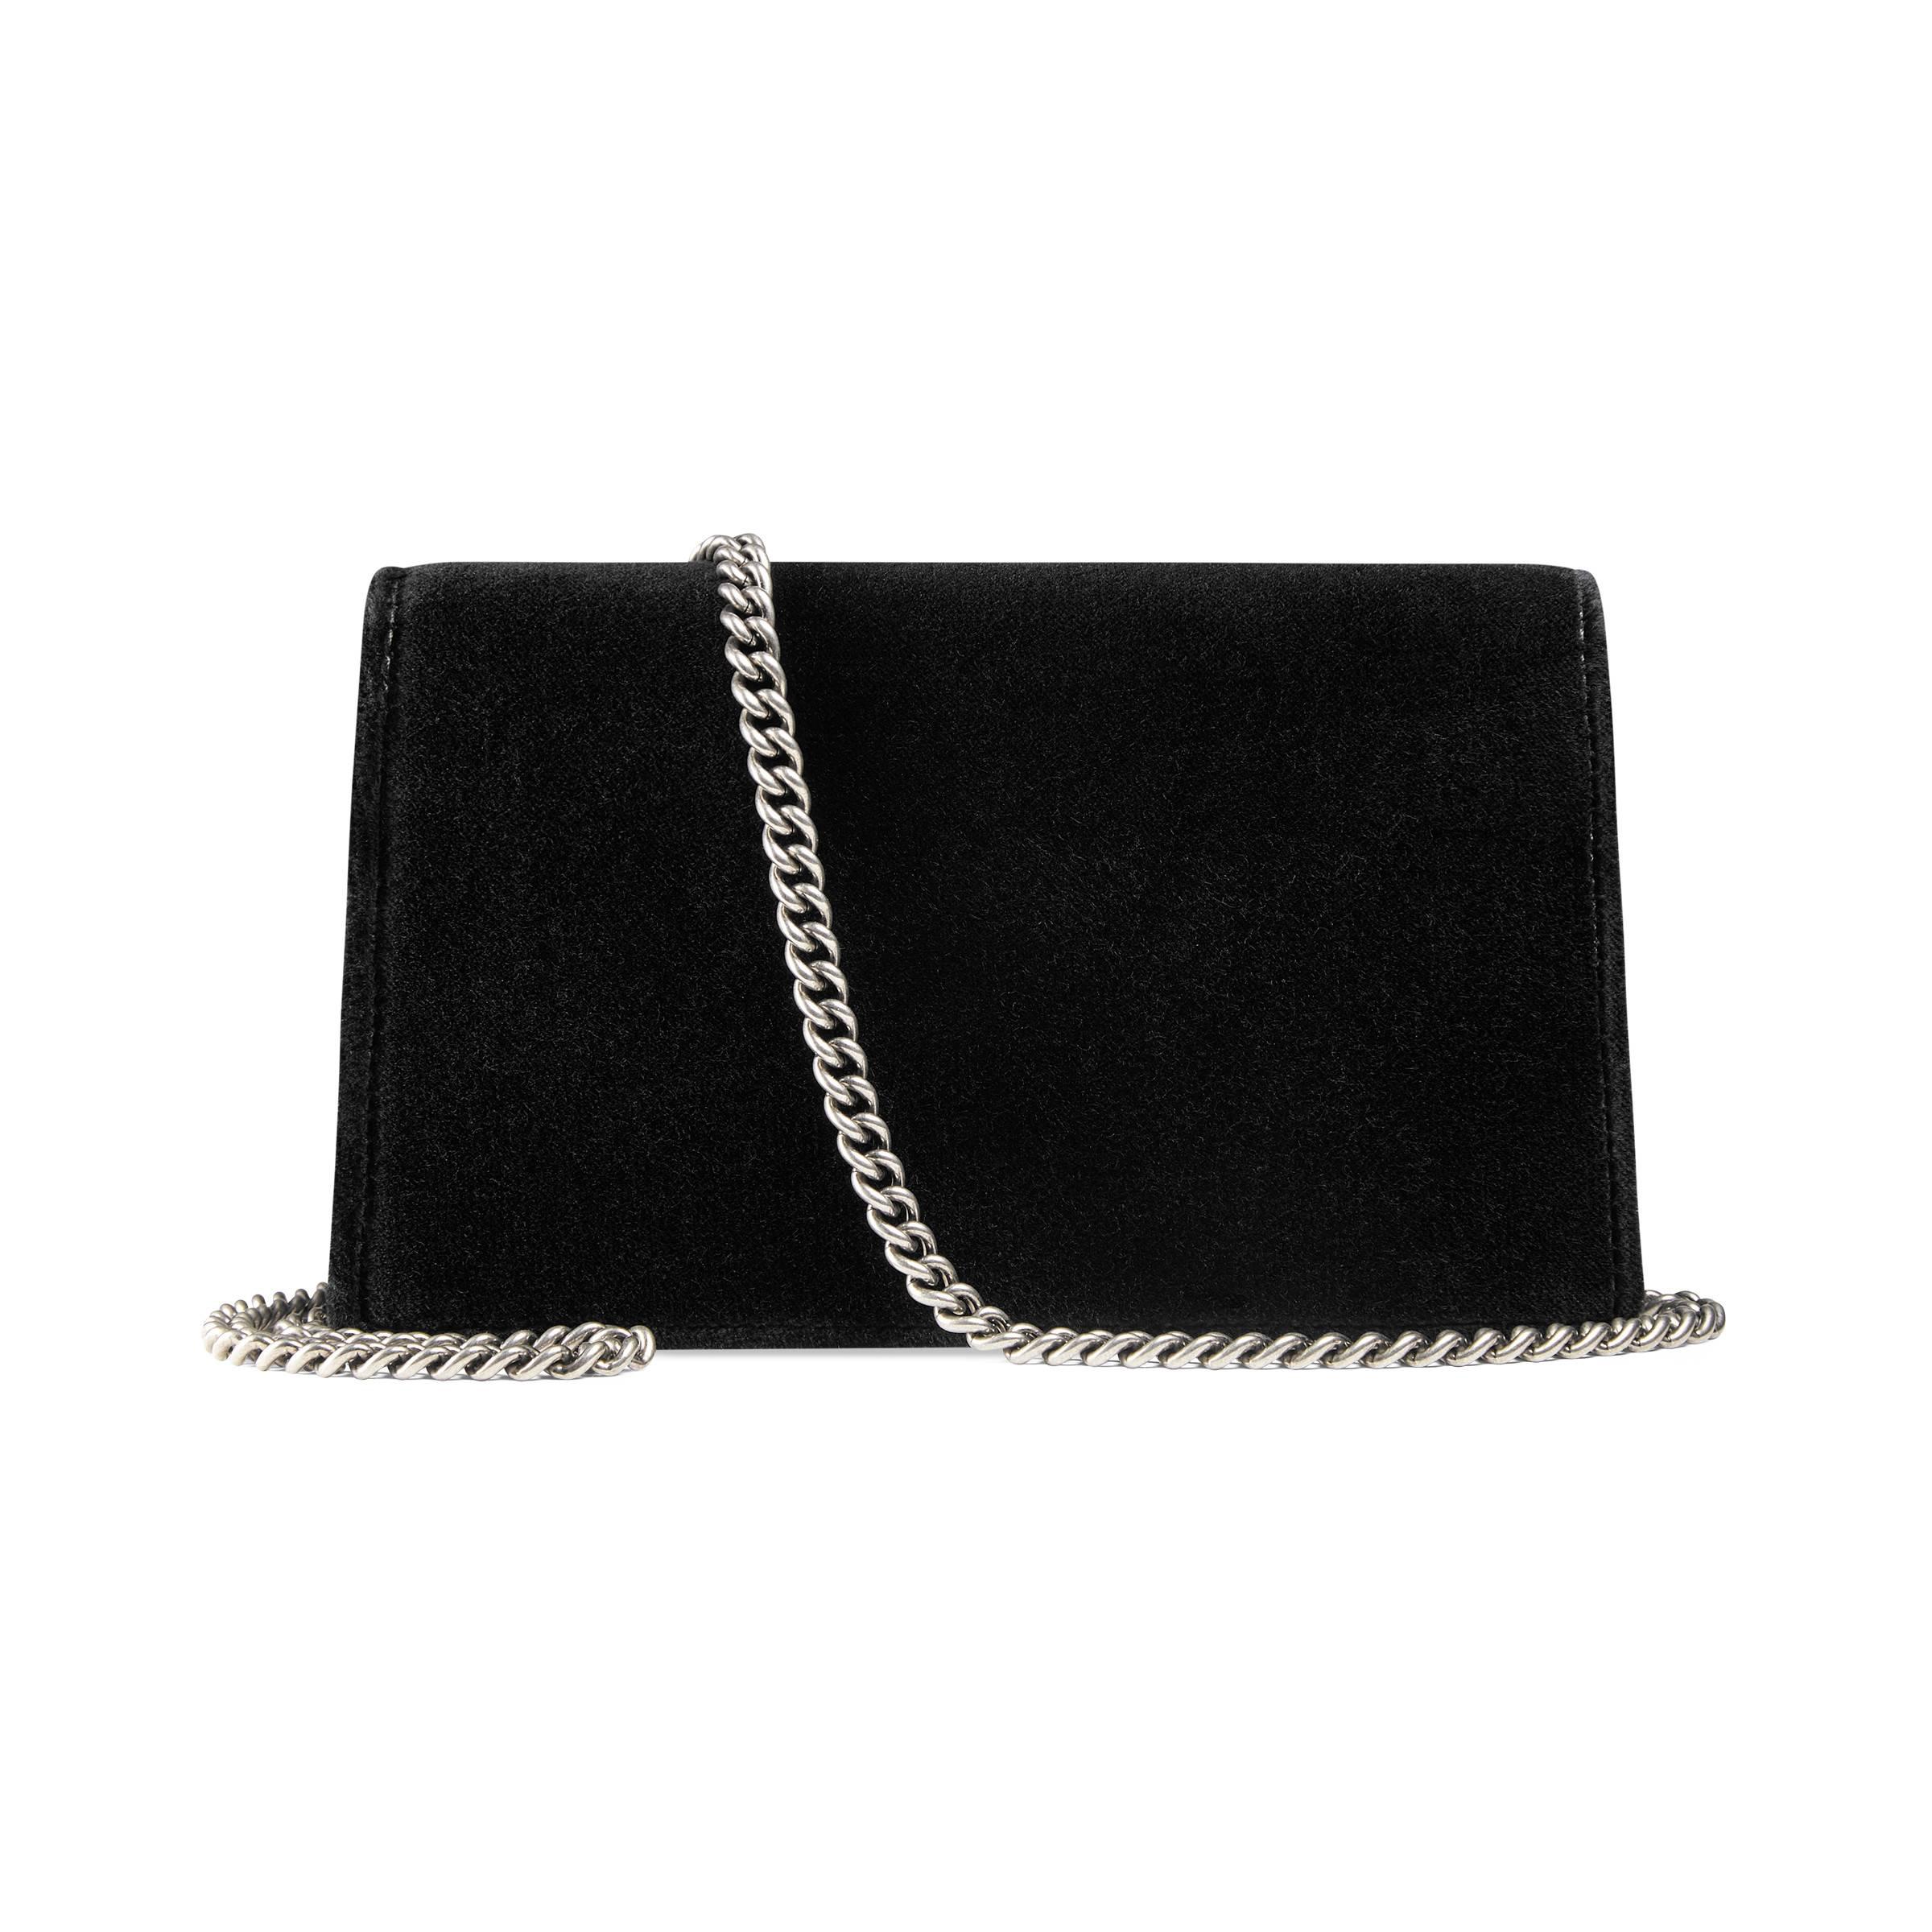 Gucci Dionysus Velvet Super Mini Bag in Black - Lyst